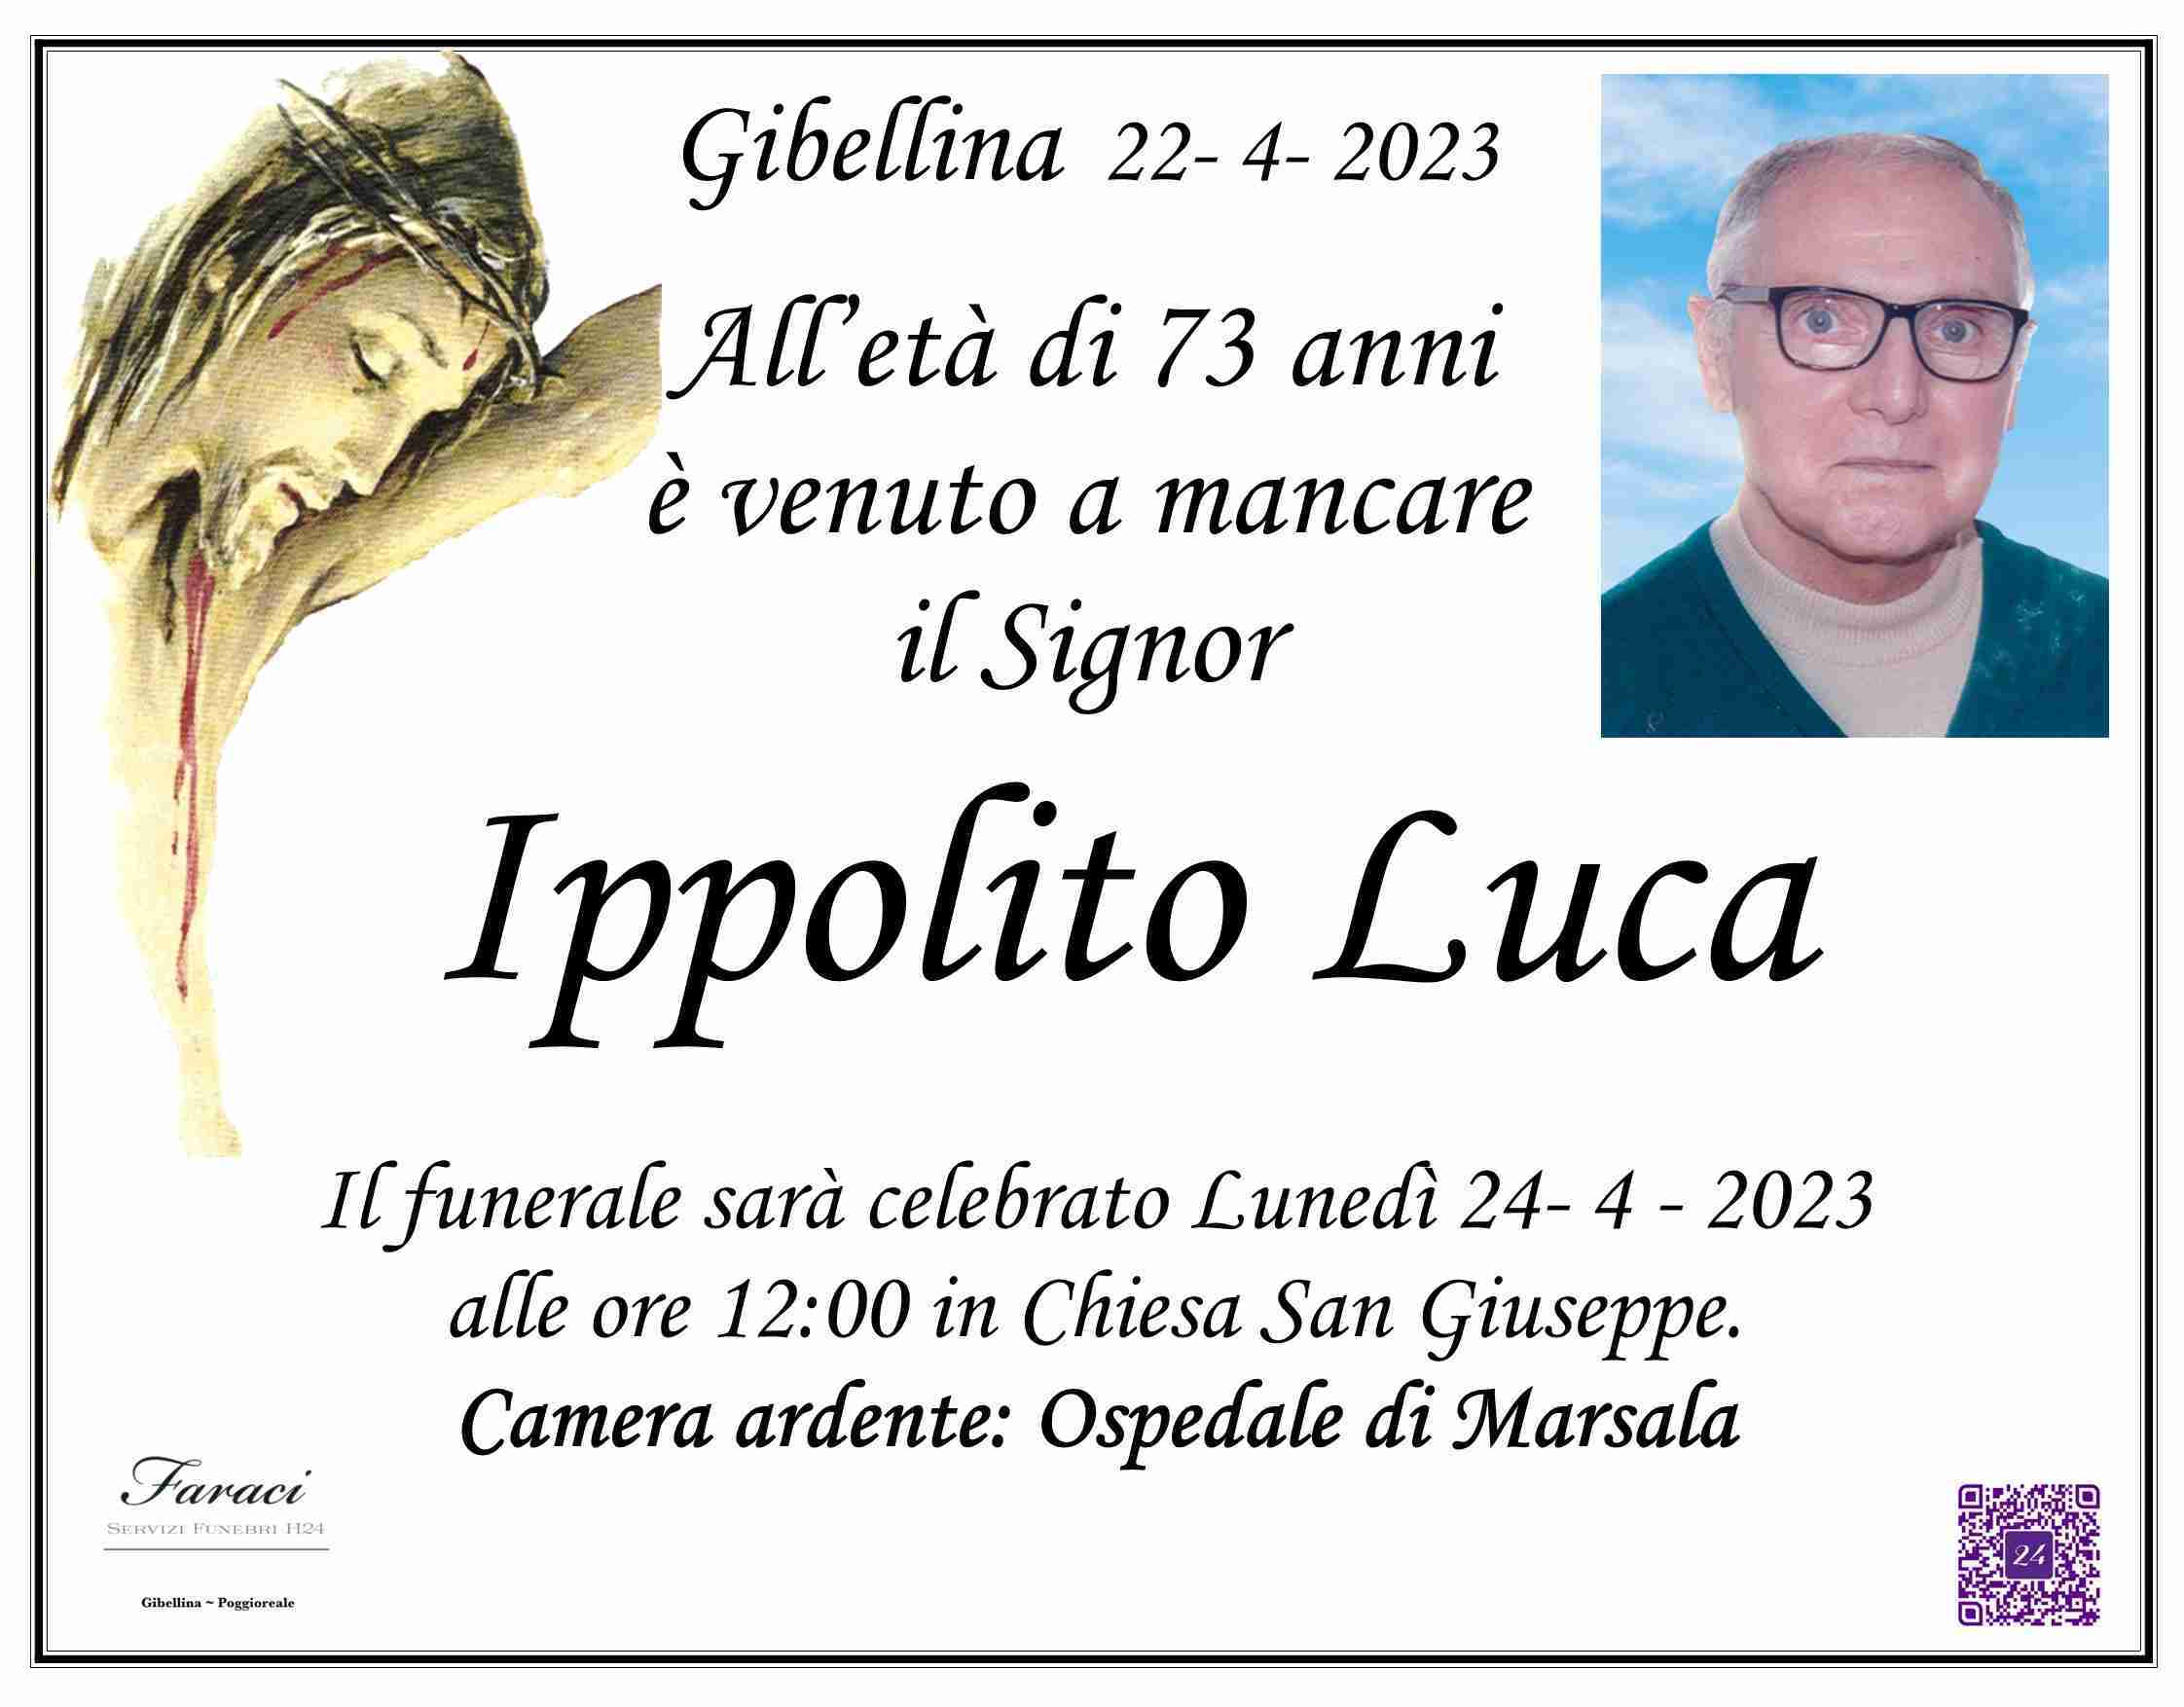 Luca Ippolito